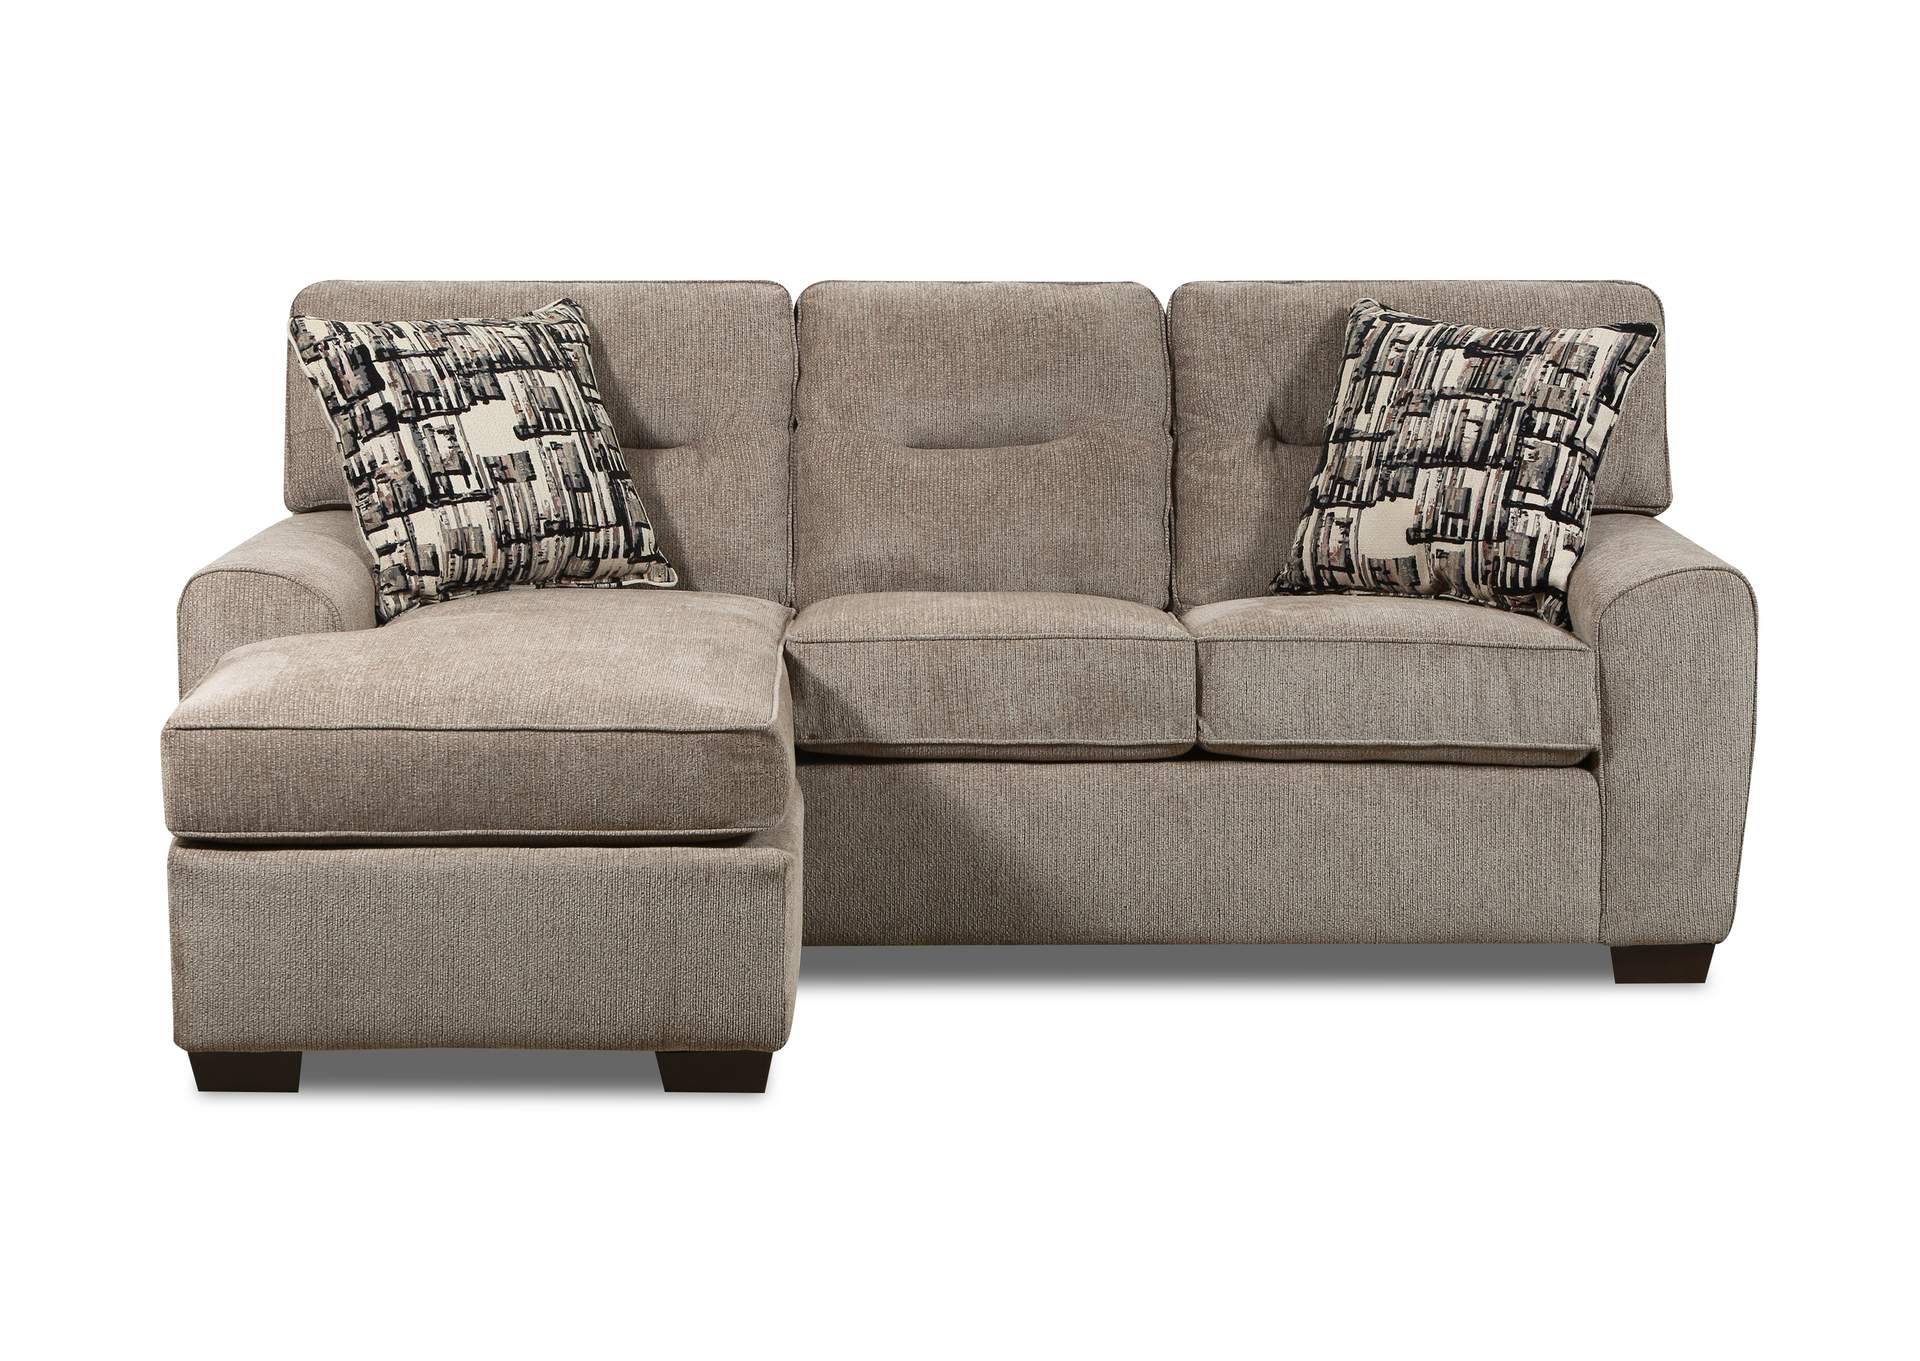 Sofa/Chaise - Driscoll Cappuccino / Cubism Spark,Lane Furniture